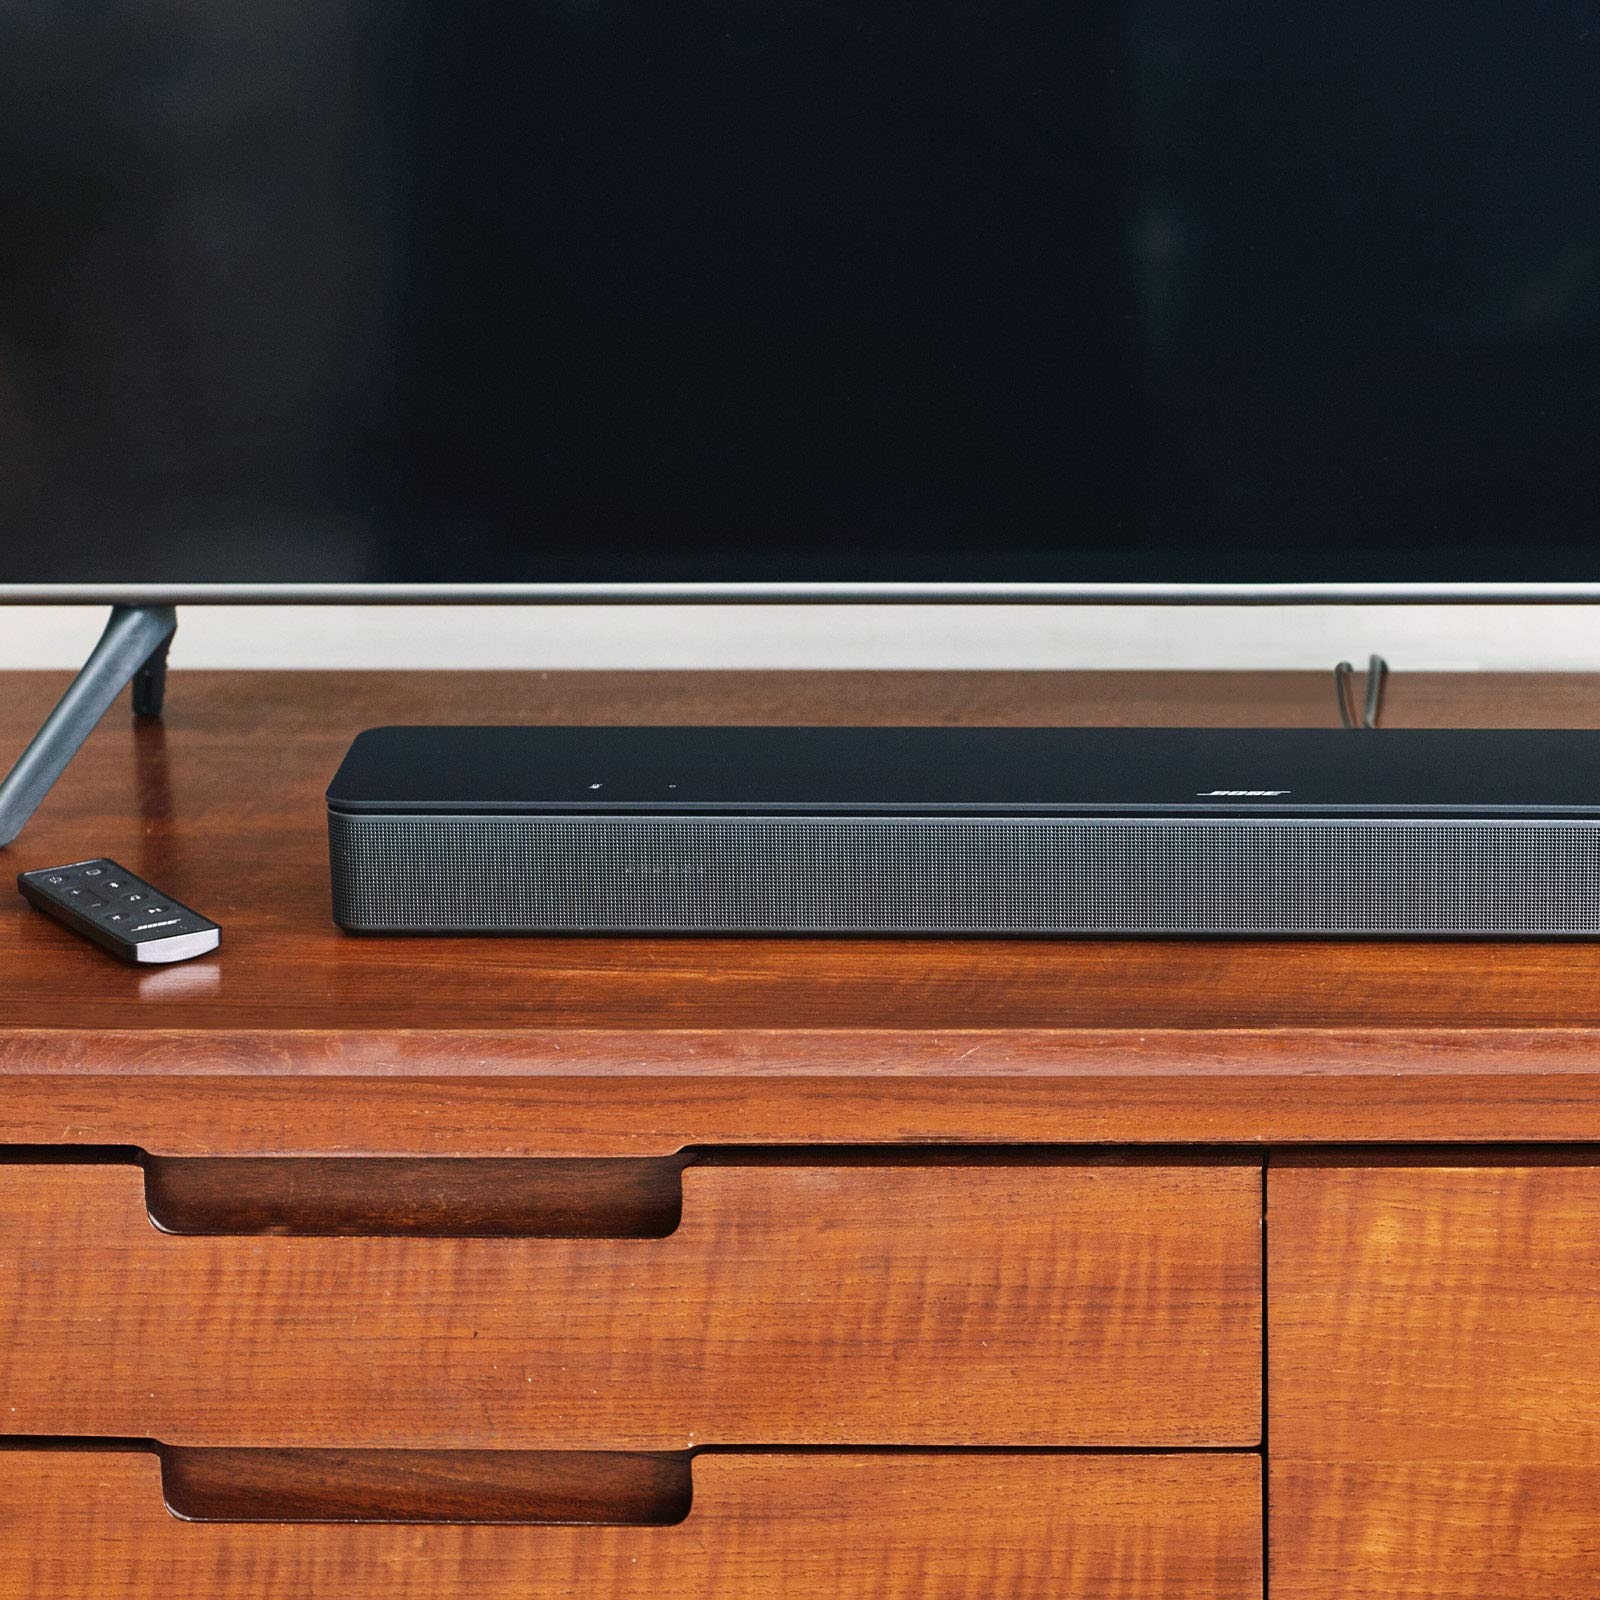 Bose Smart Soundbar 300 - Bluetooth connectivity with Alexa voice control built in, Black